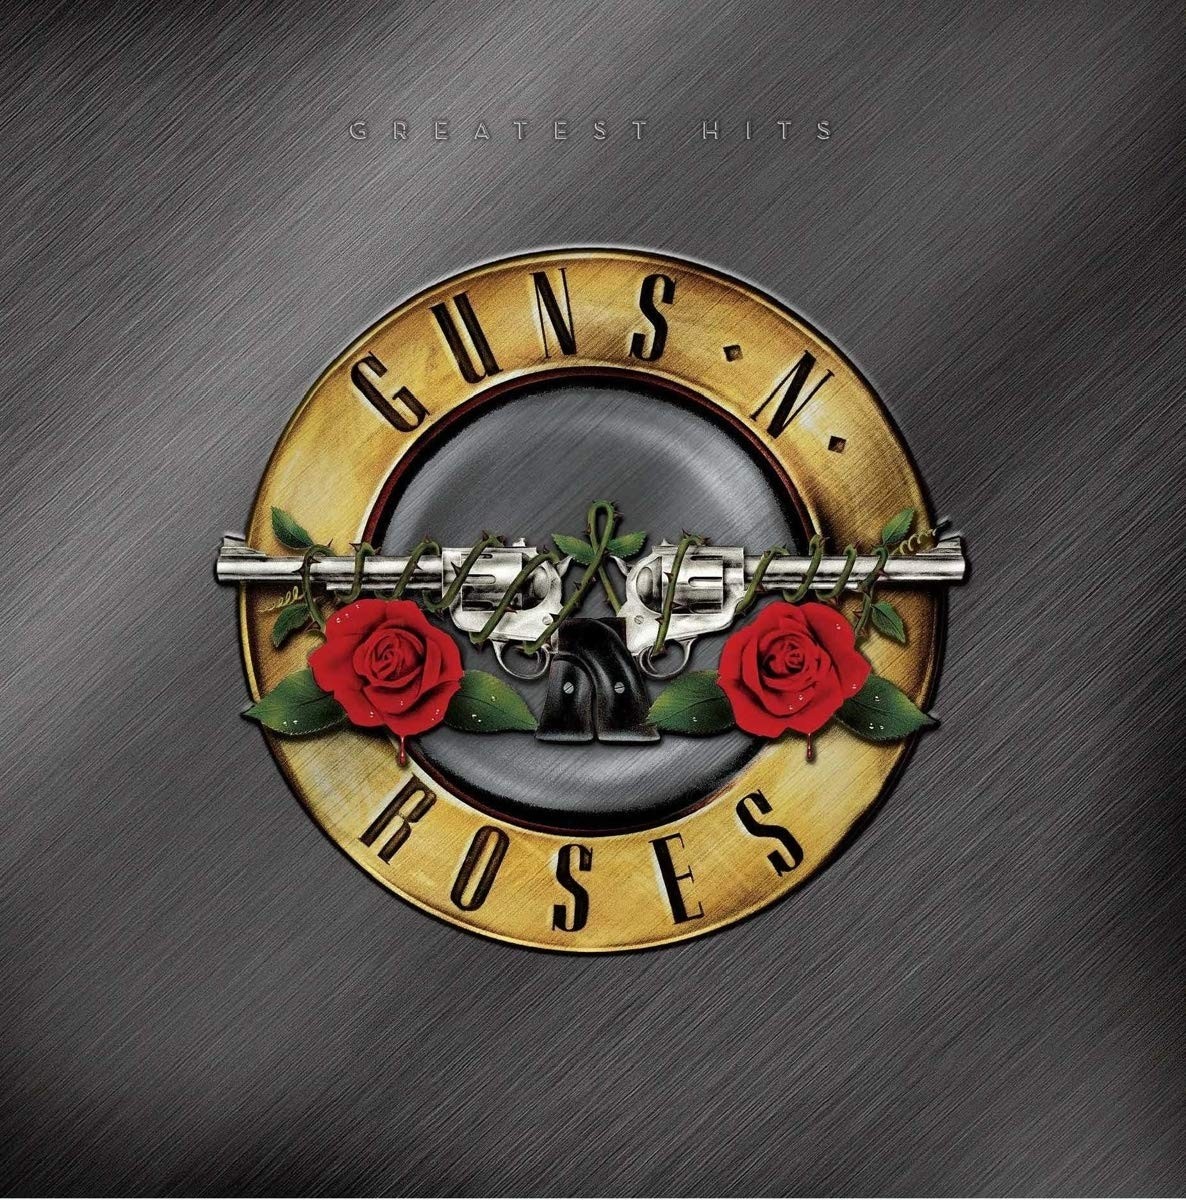 Guns N Roses - Greatest Hits 2XLP